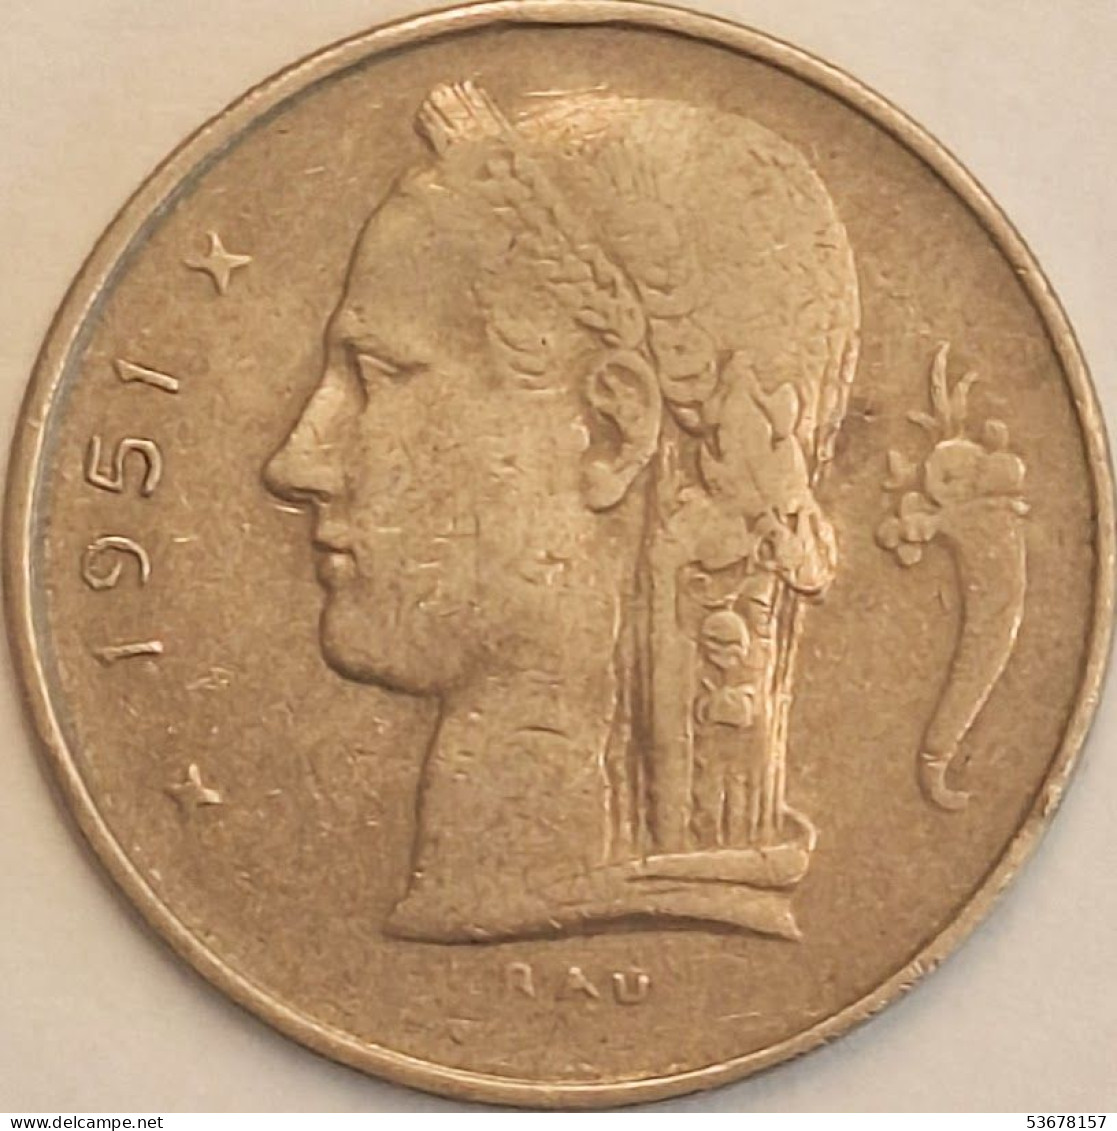 Belgium - Franc 1951, KM# 142.1 (#3105) - 1 Franc